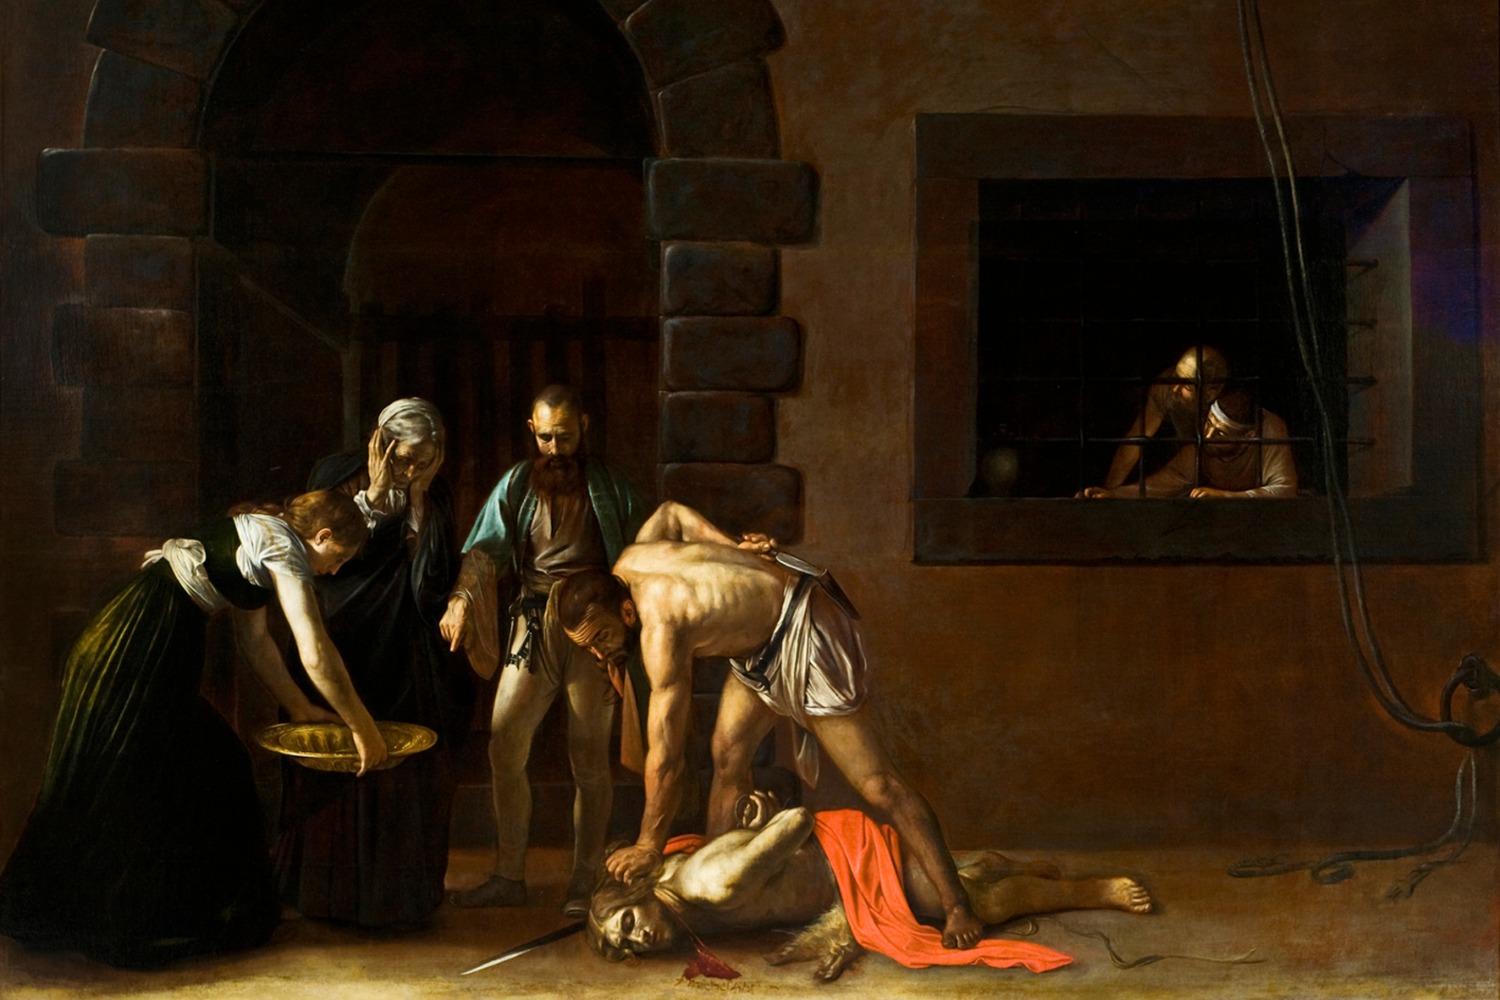 Caravaggio's "The Beheading of Saint John the Baptist"